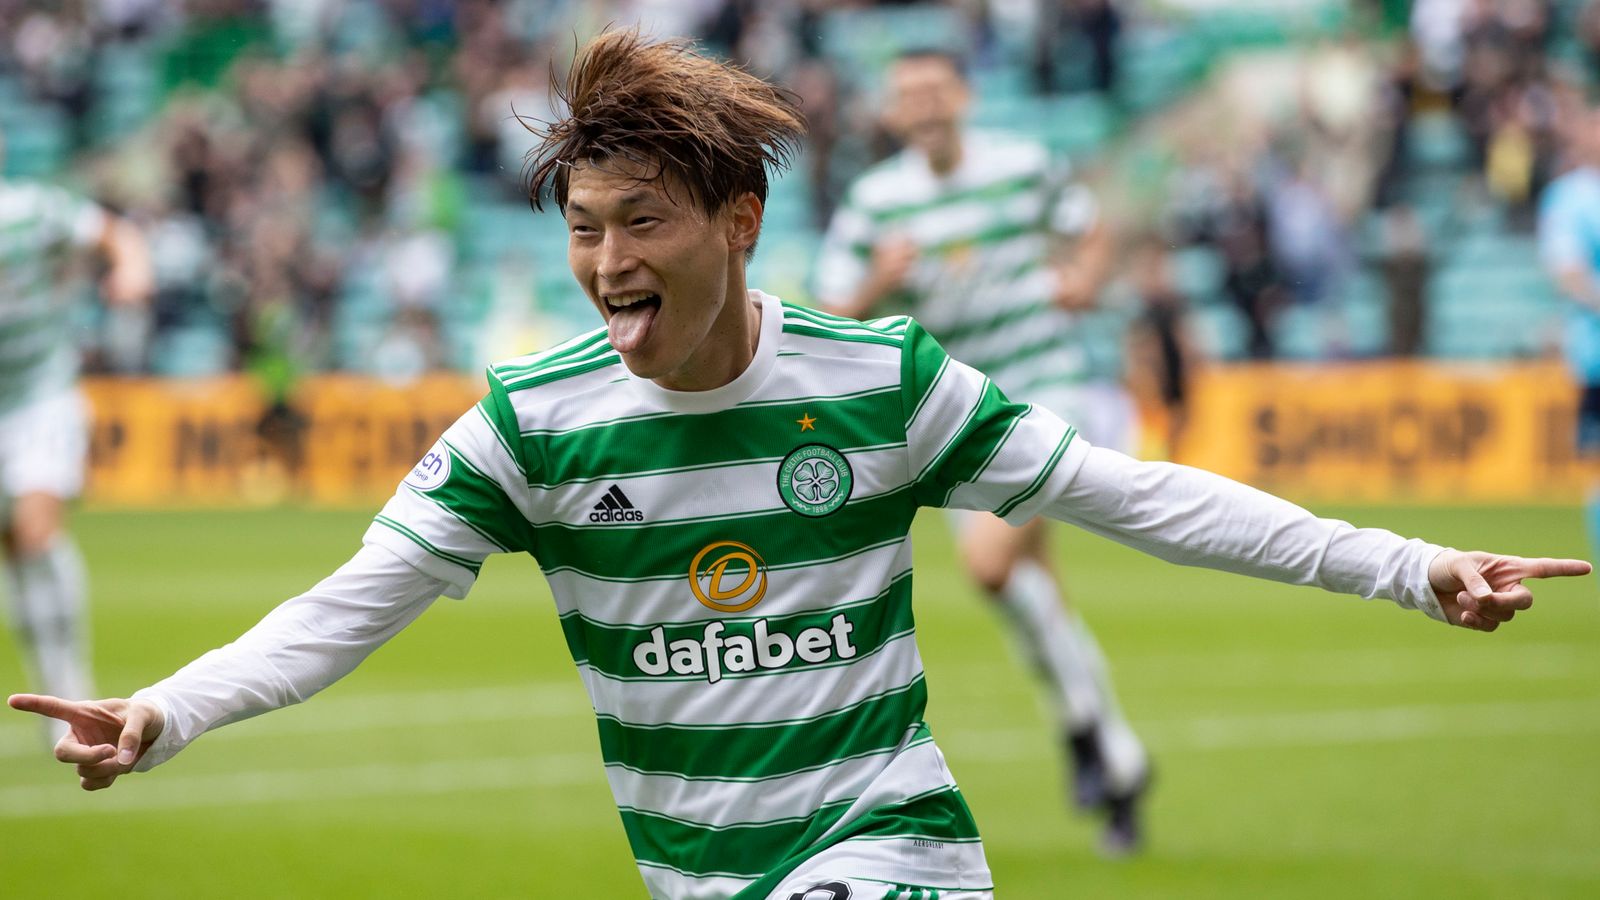 Celtic Dundee Kyogo Furuhashi Scores Hat Trick For Assured